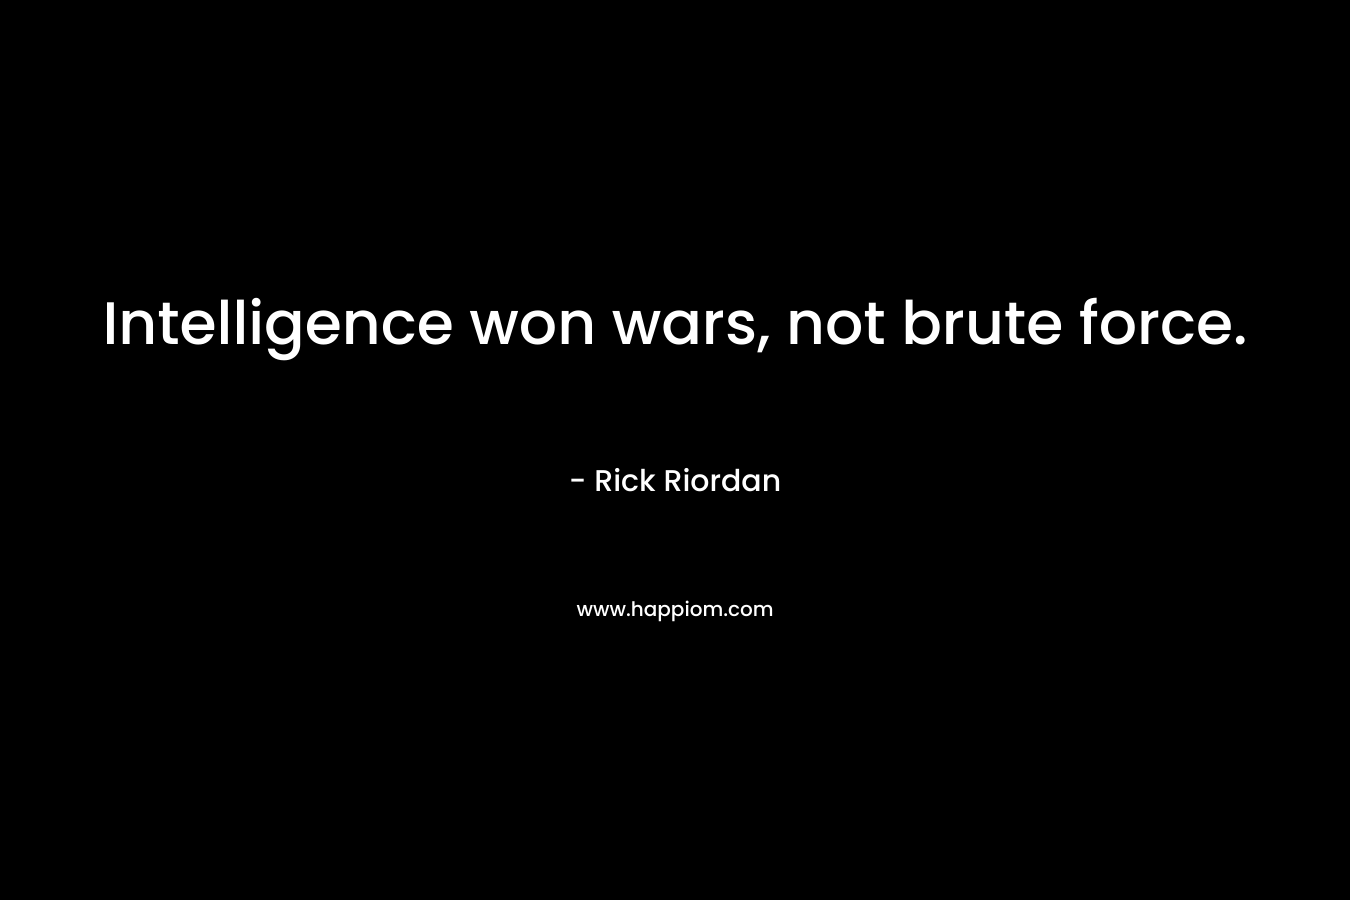 Intelligence won wars, not brute force.